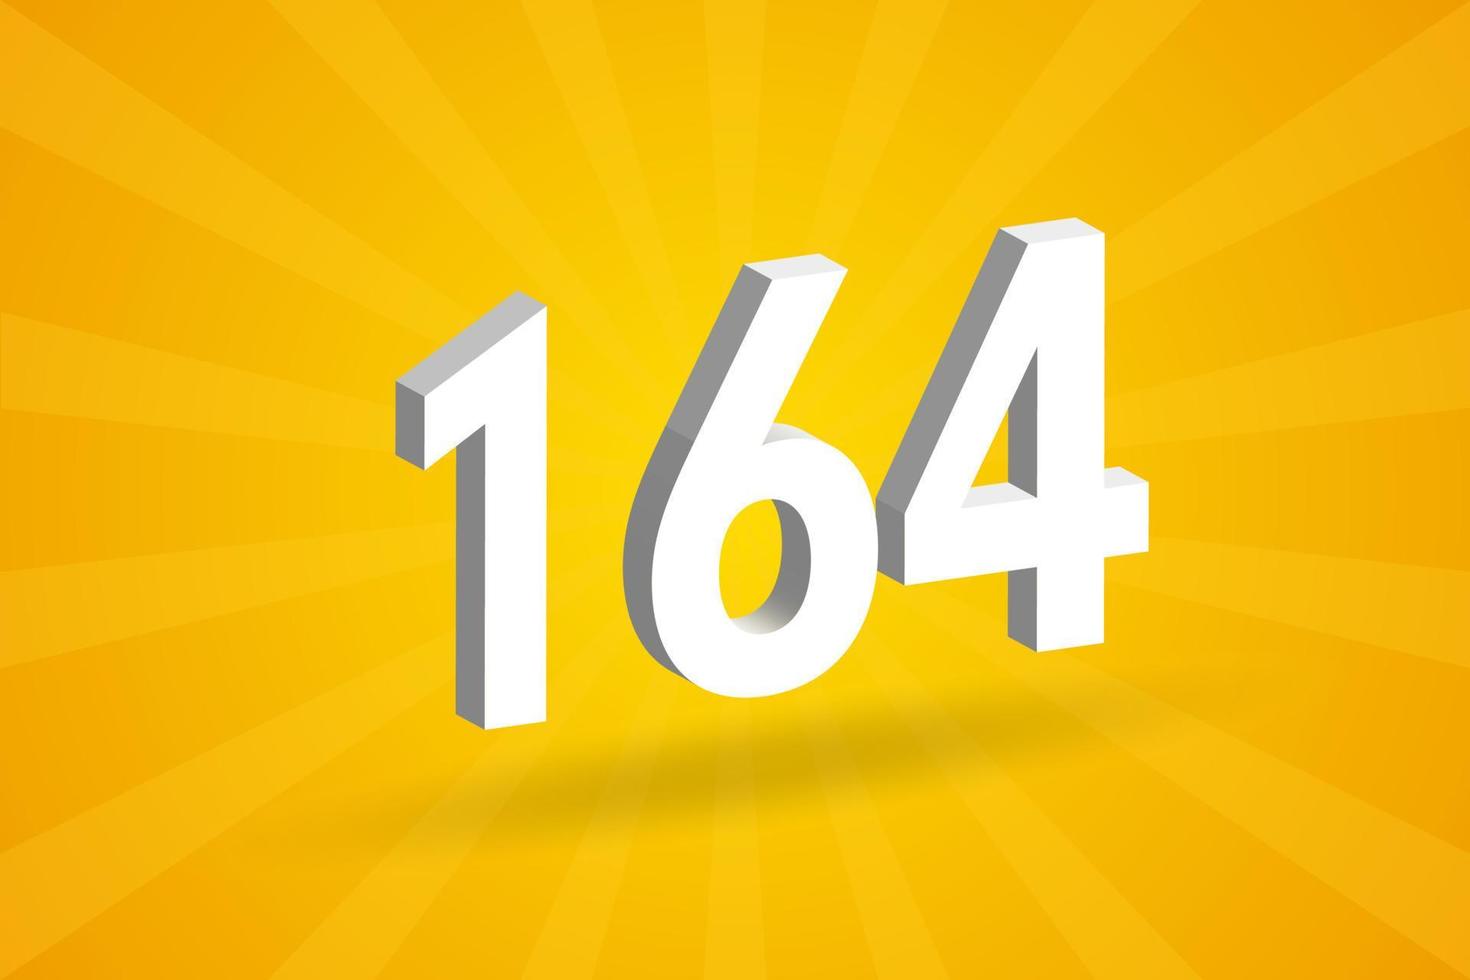 3d 164 siffra font alfabet. vit 3d siffra 164 med gul bakgrund vektor